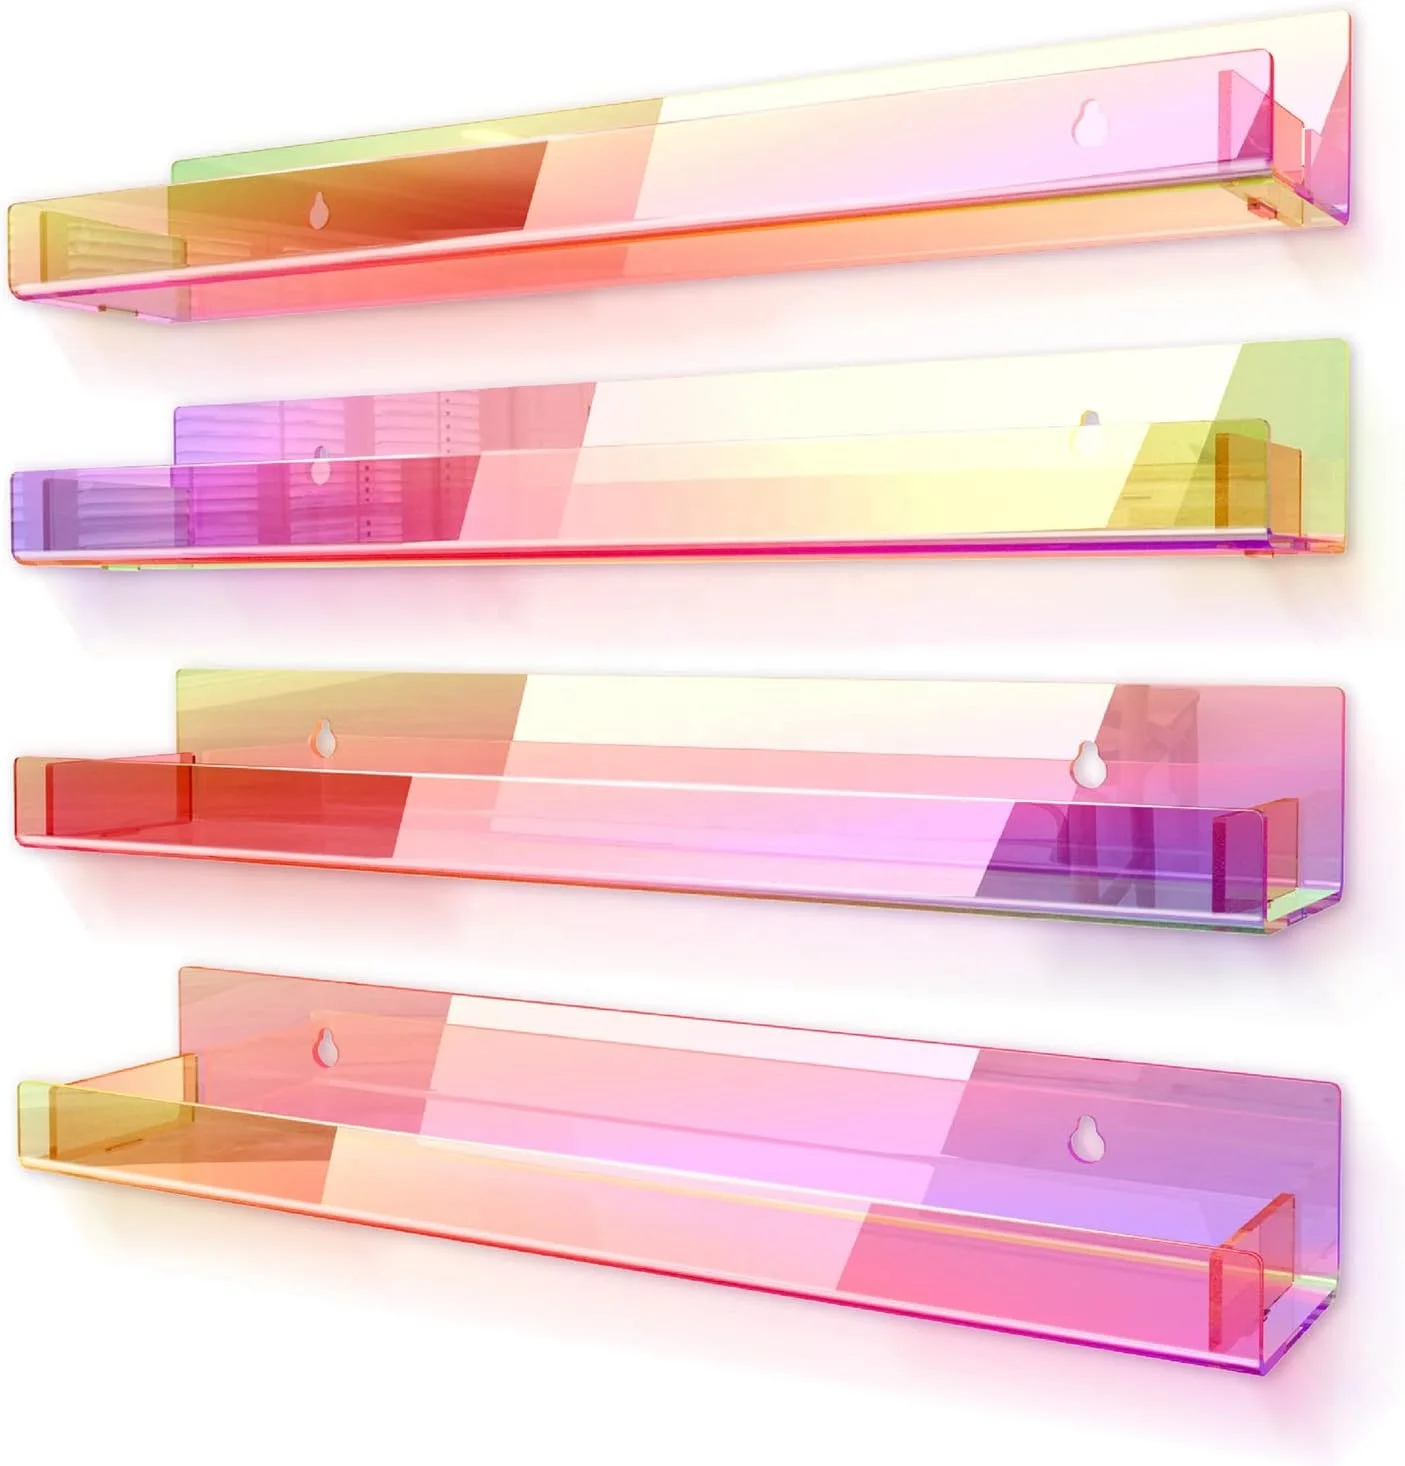 

4 Pack Wall Mounted Shelves Clear Rainbow Iridescent Acrylic Nail Polish Holder Organizer Display Book Shelves